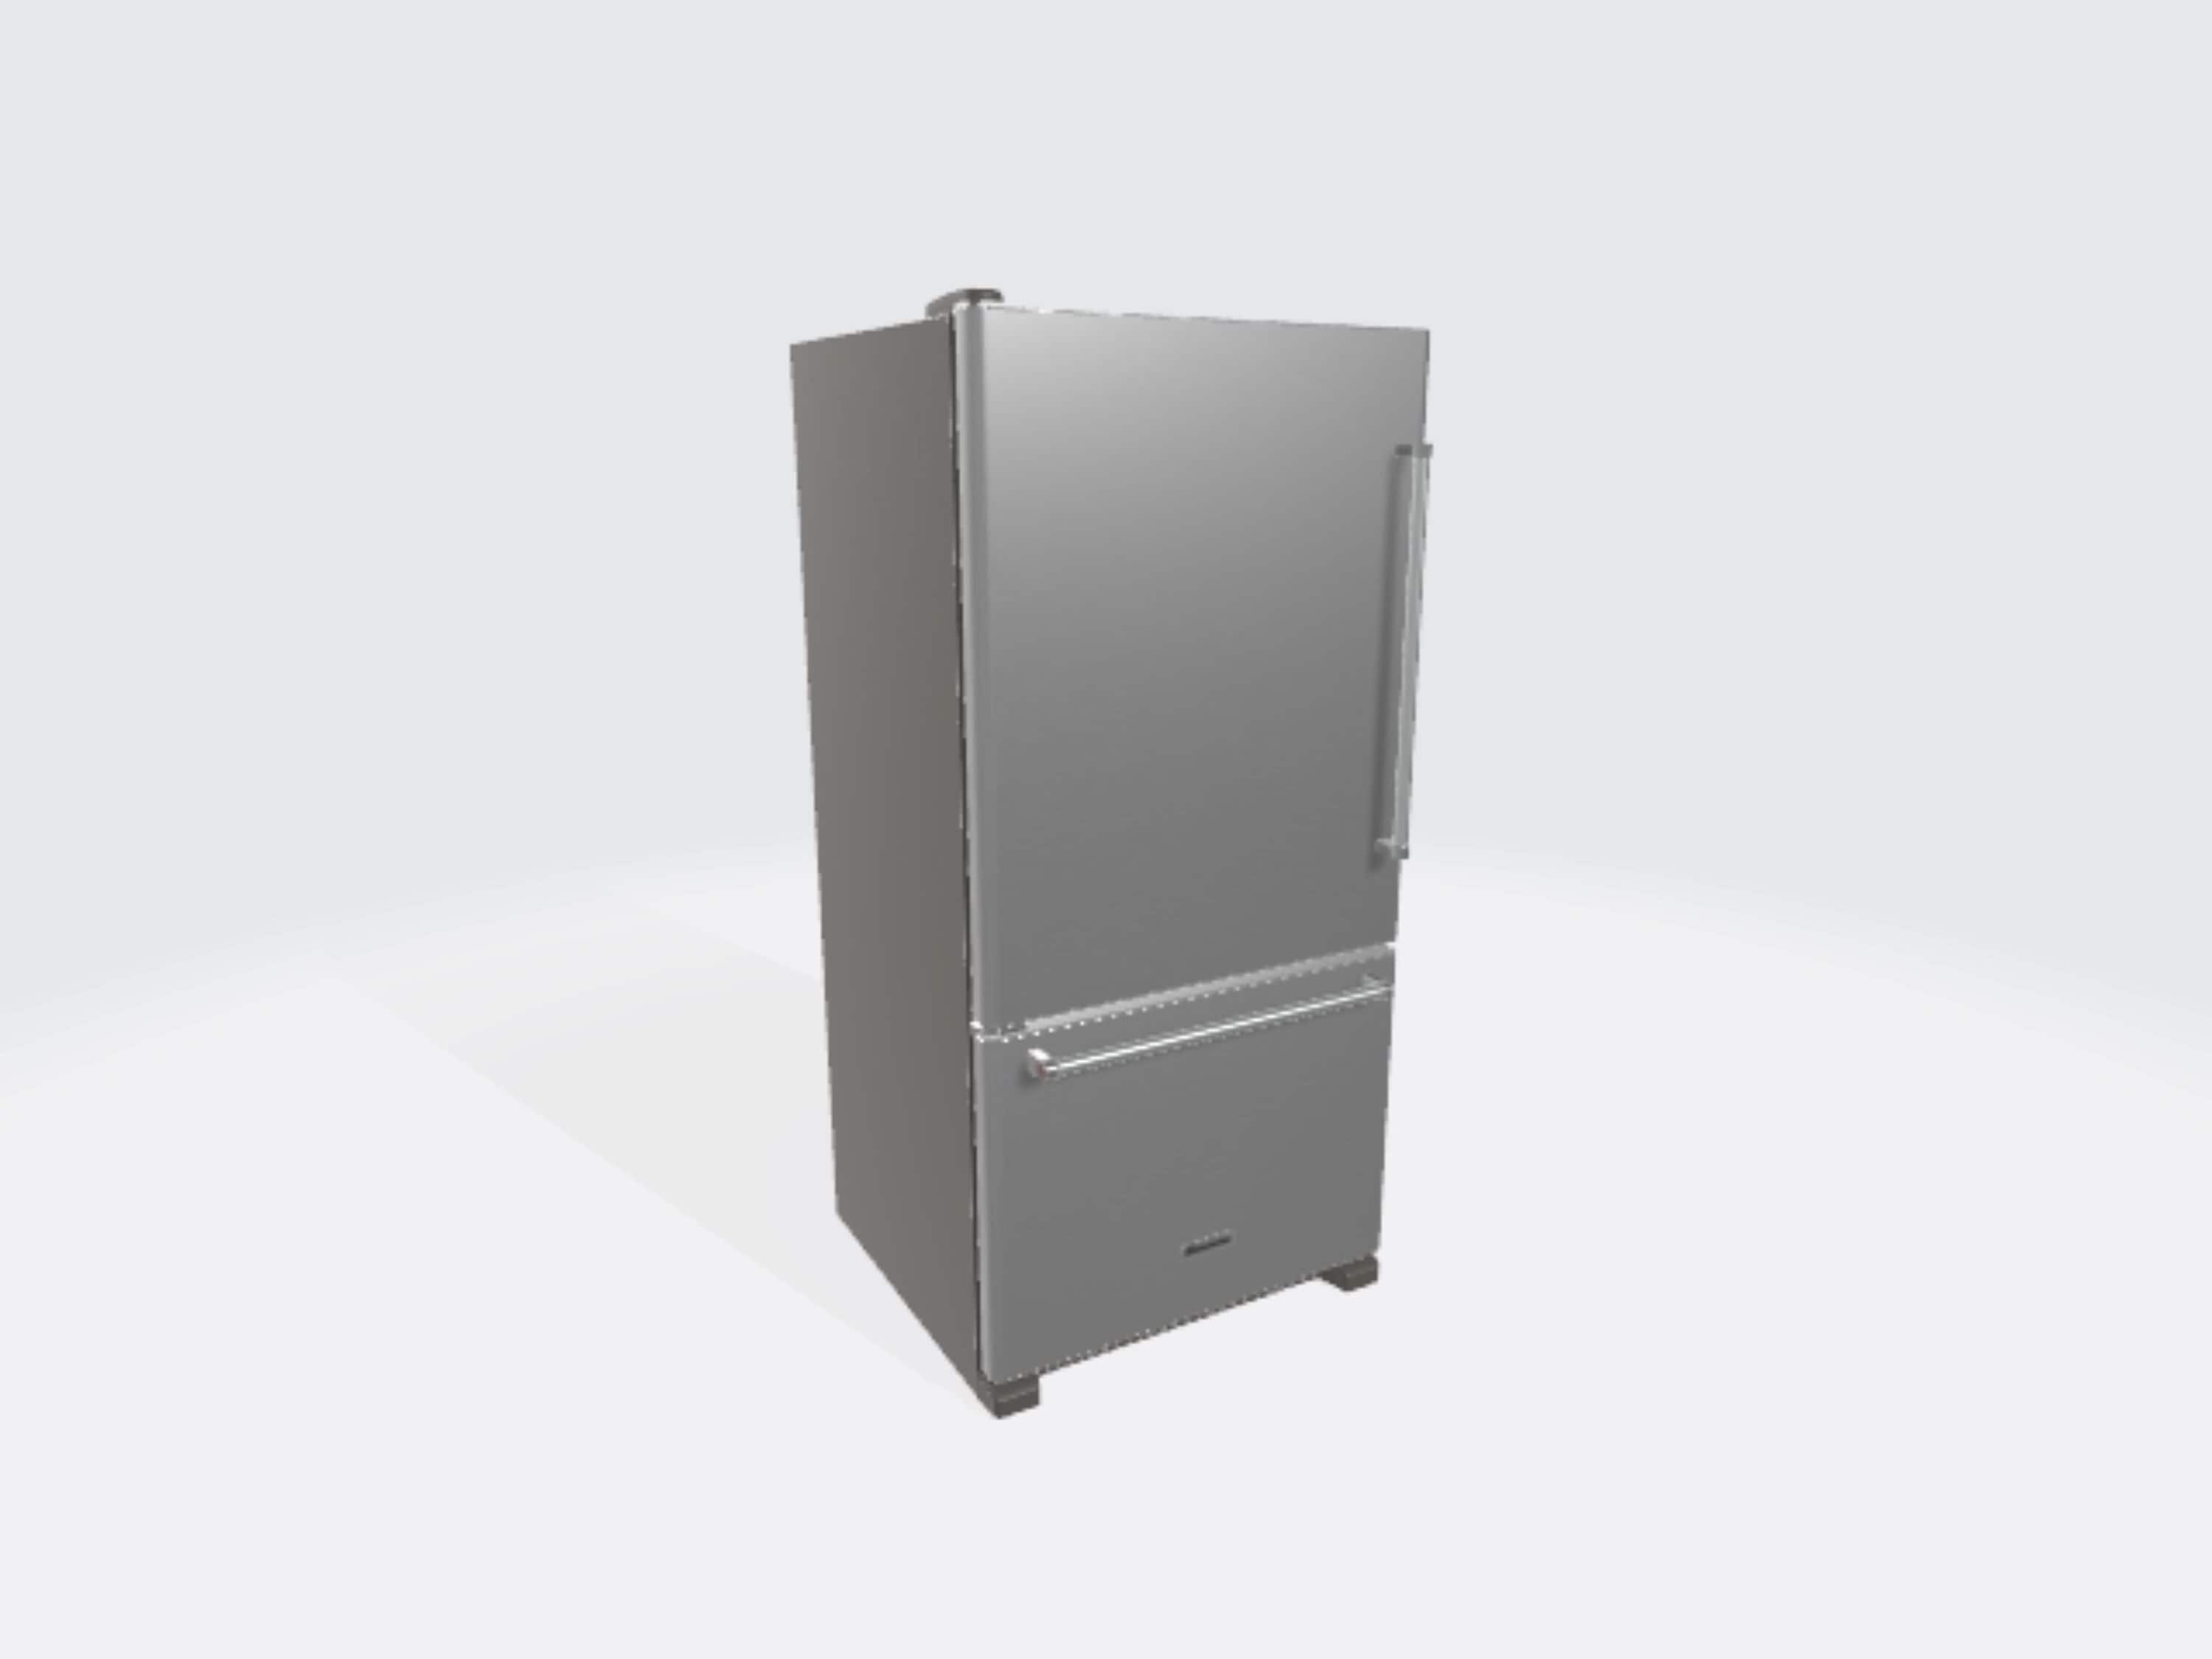 J K b K Thermostat Compatible for Samsung Single Door Refrigerator Capacity  165 - 300 Litres 